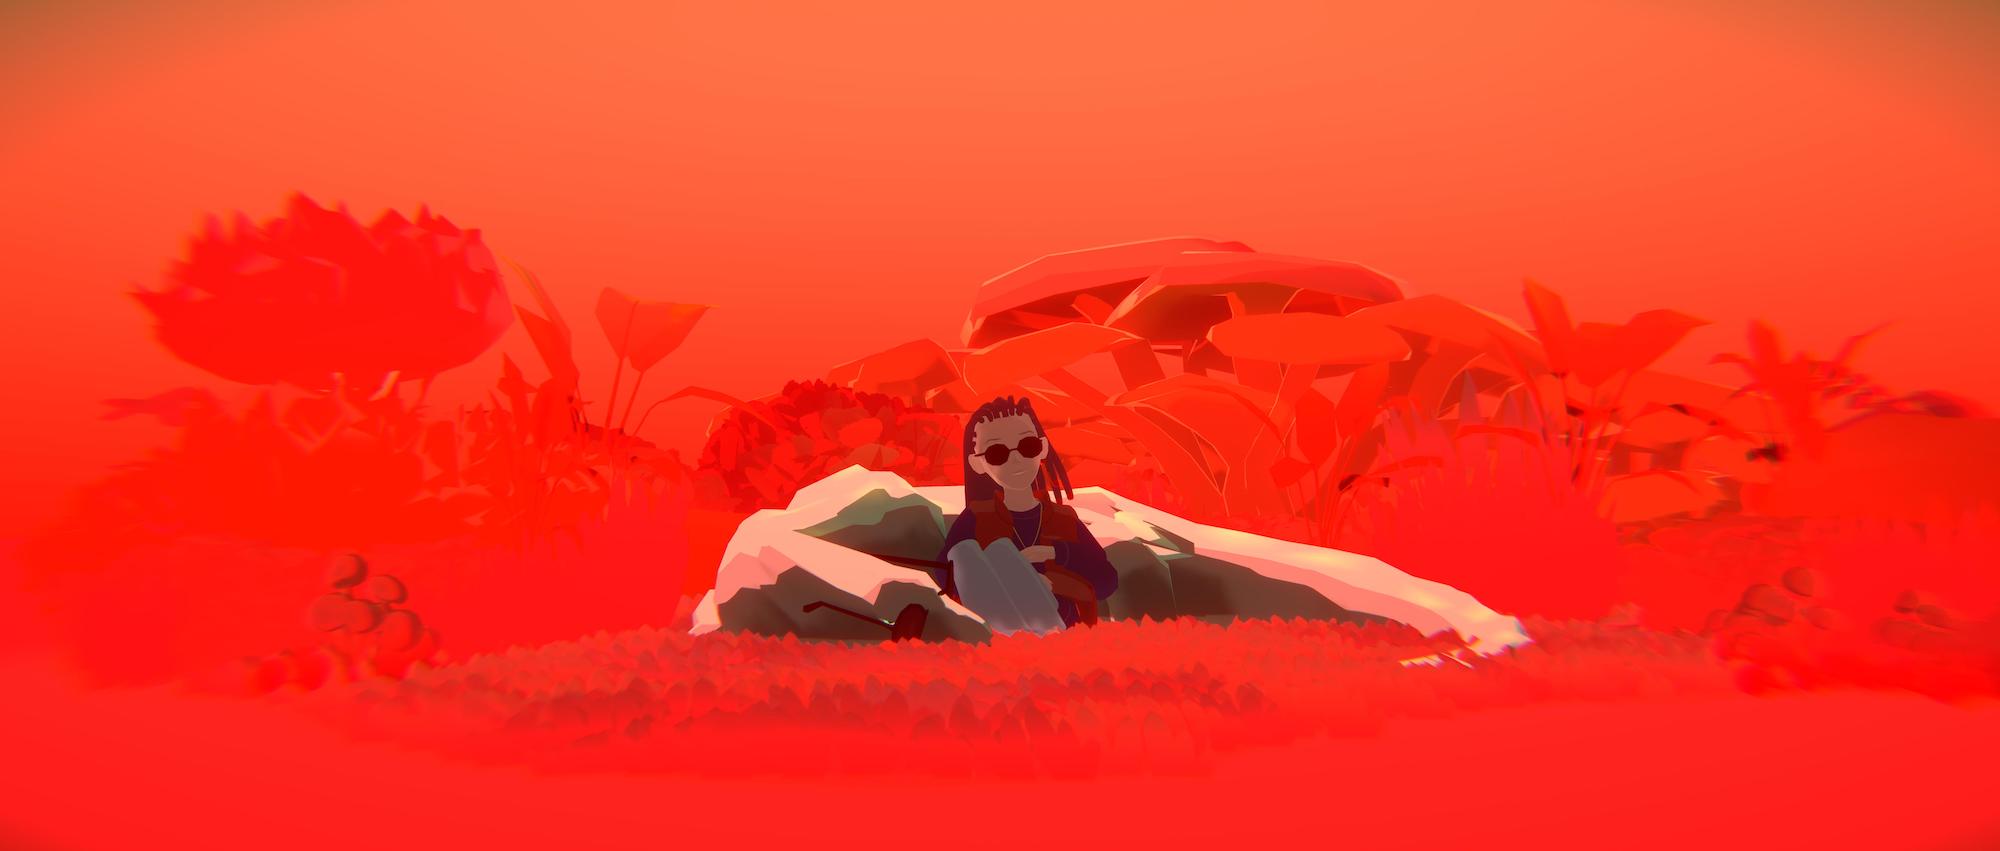 Animated image of a figure in sunglasses sitting amongst a glaring orange environment.